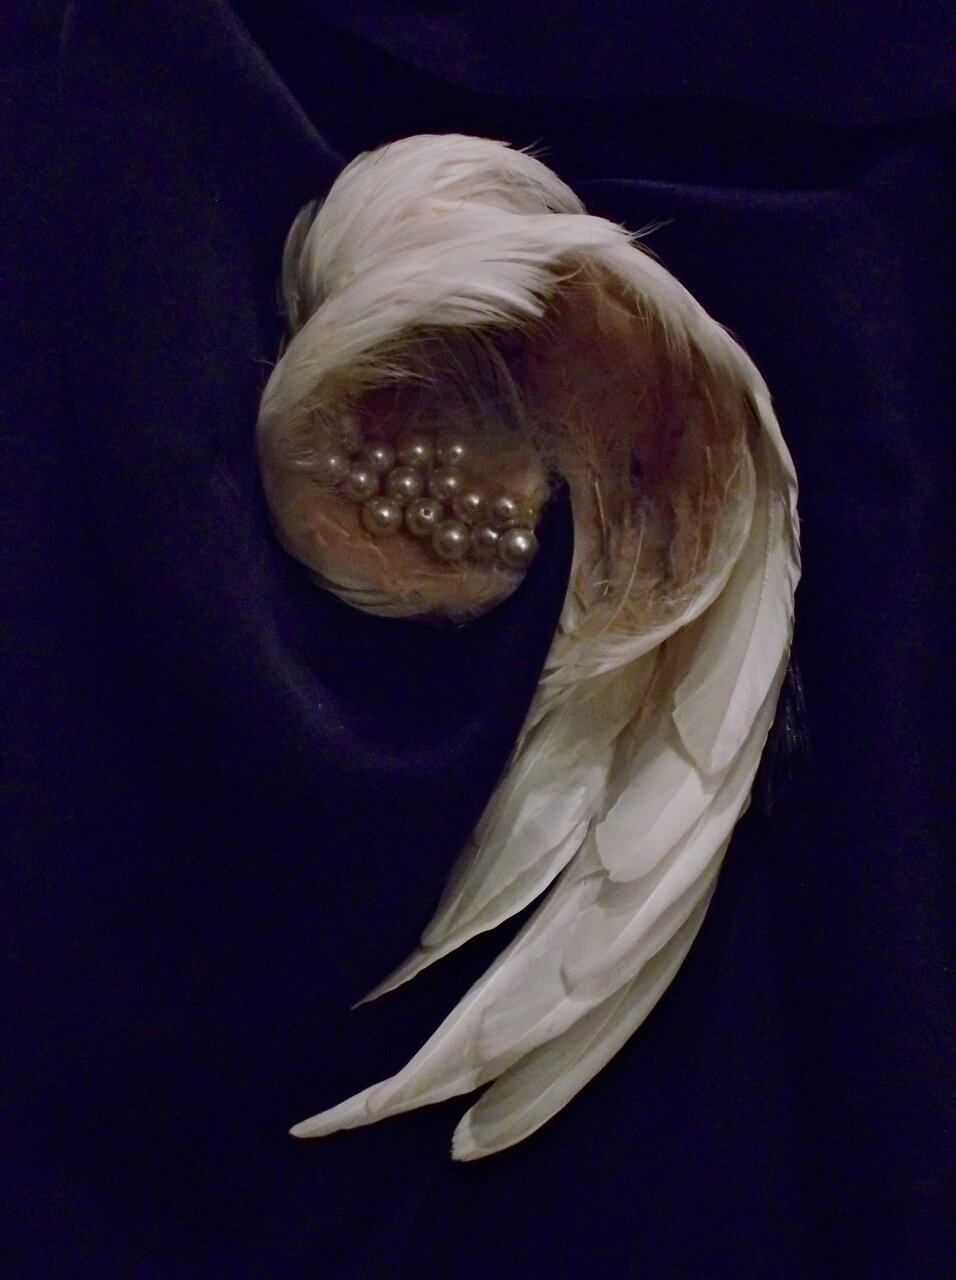  2013  silk, feathers, pearls, thread 